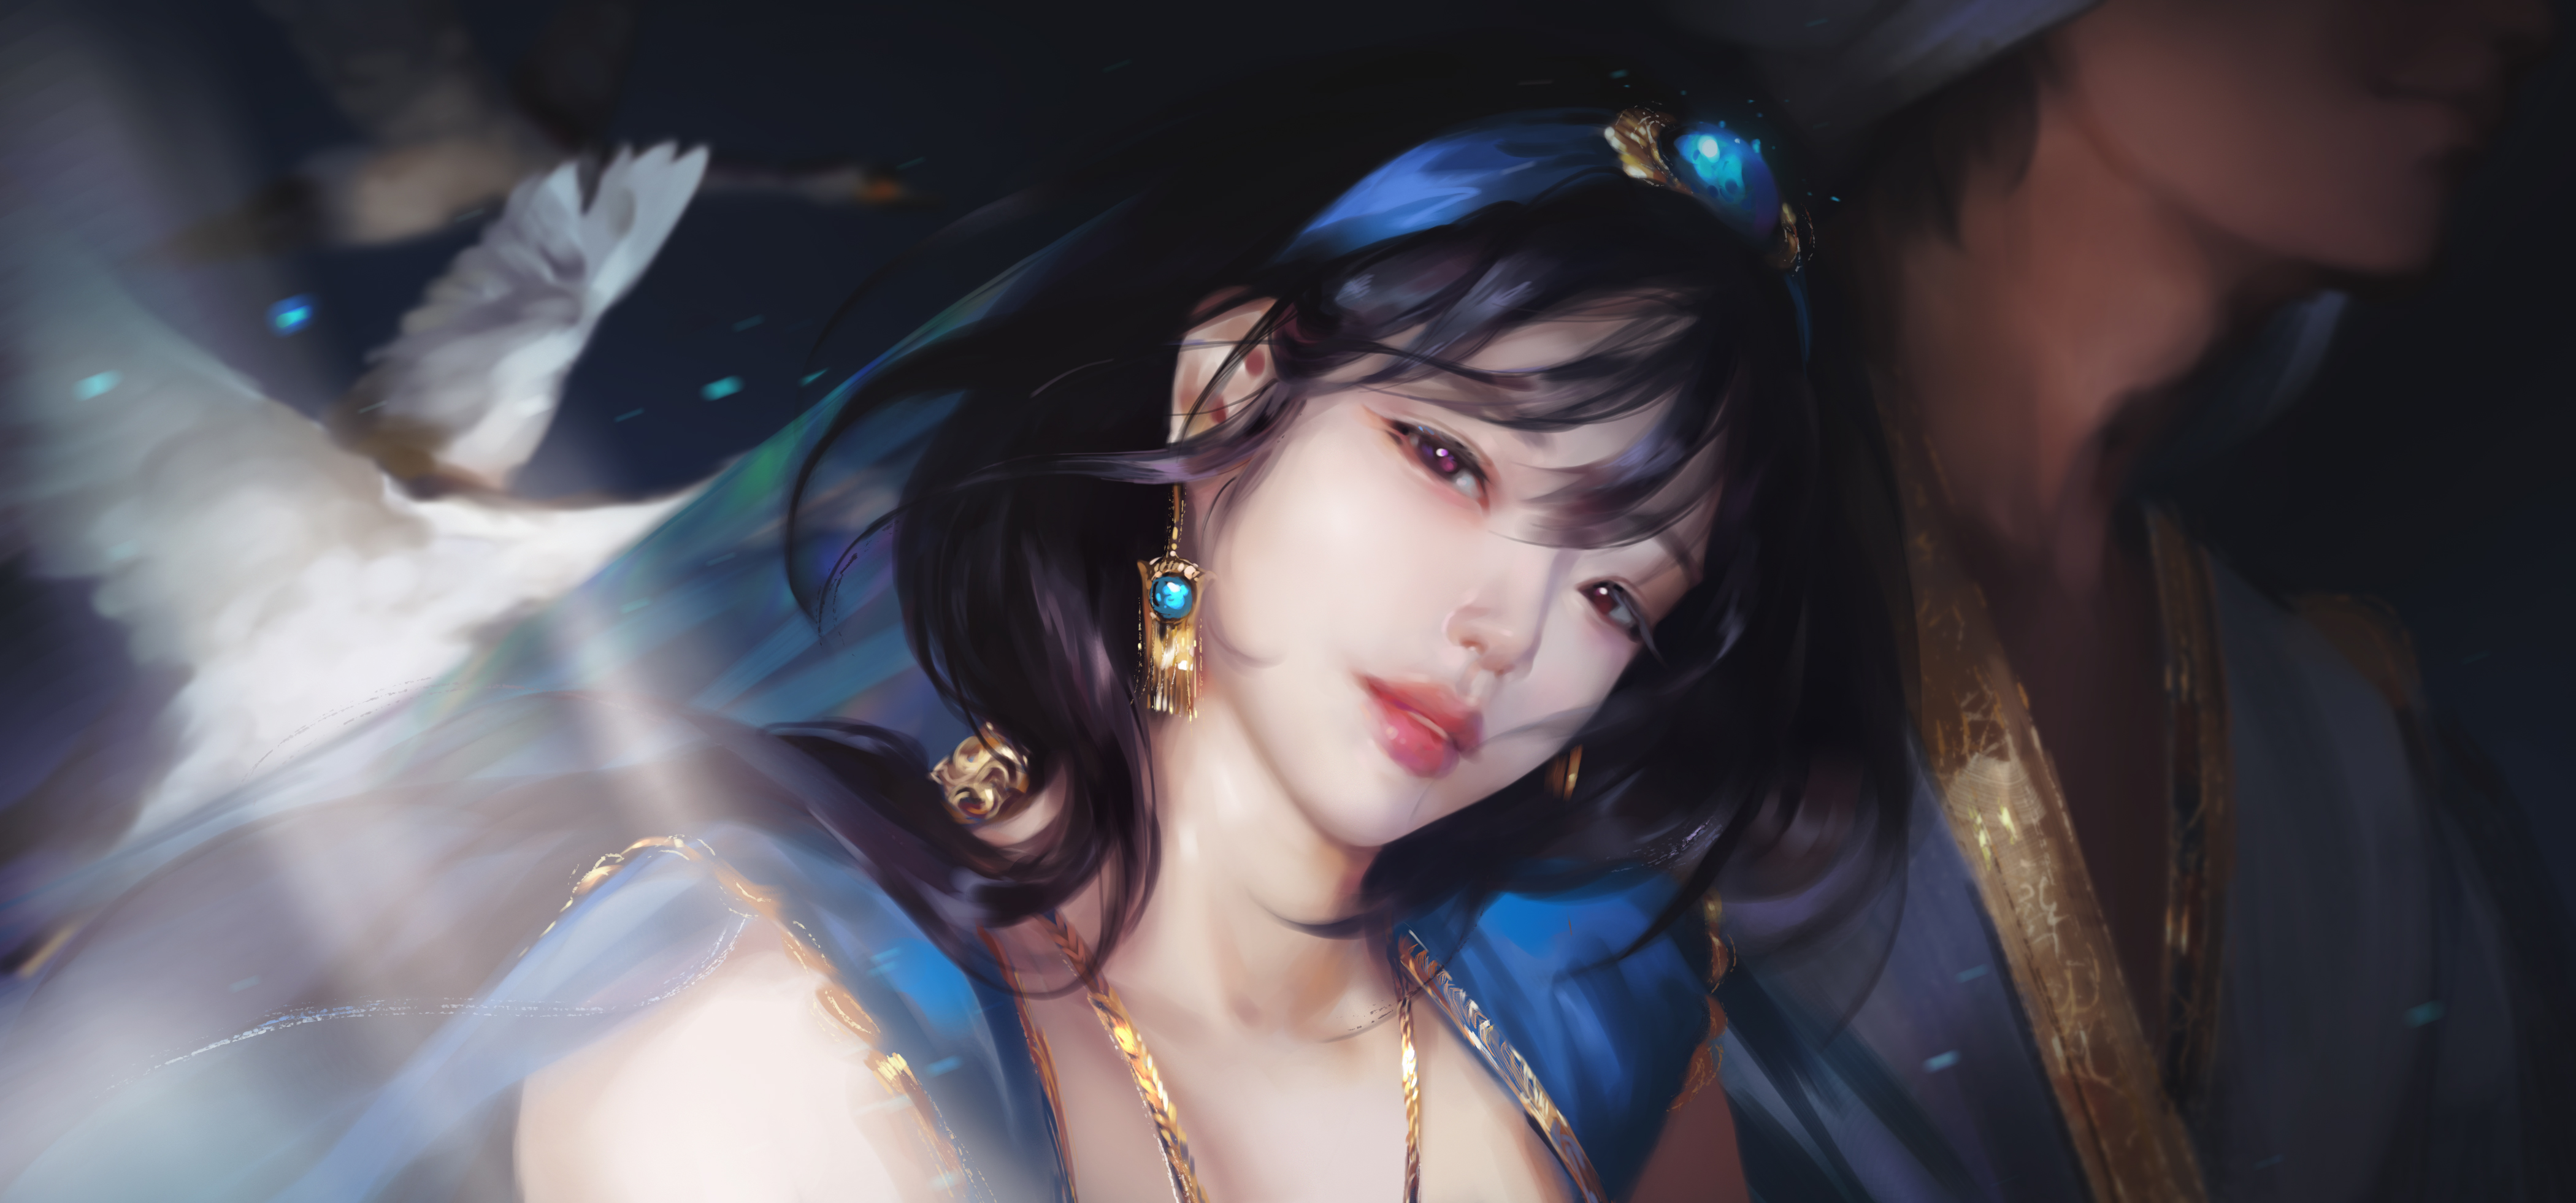 General 4200x1962 women Aladdin Princess Jasmine blue clothing Taejune Kim fantasy girl digital art ultrawide